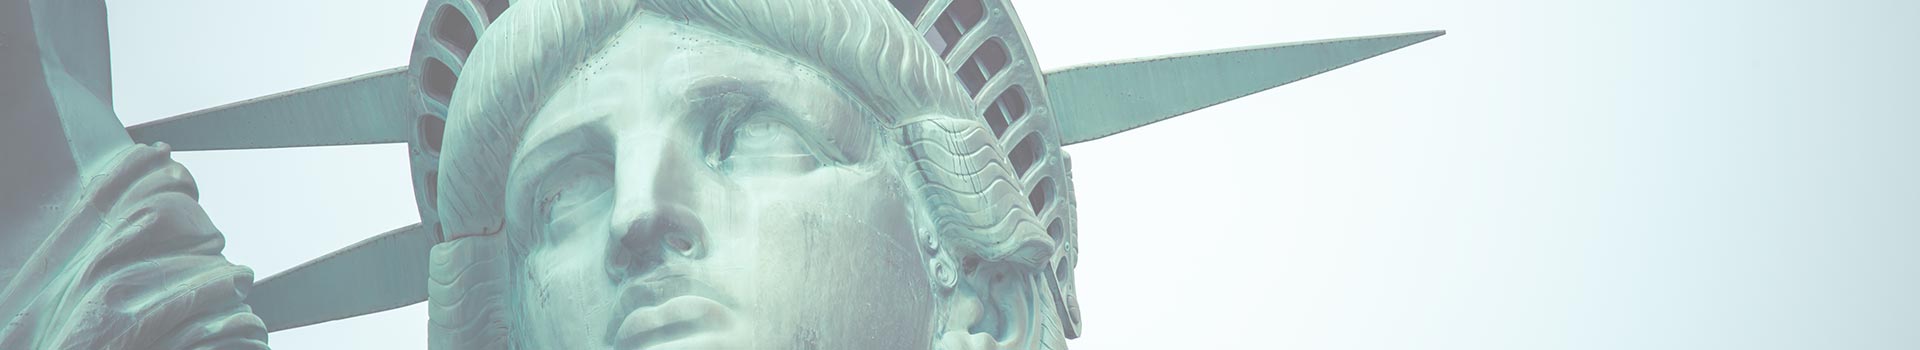 Close up statue of liberty head